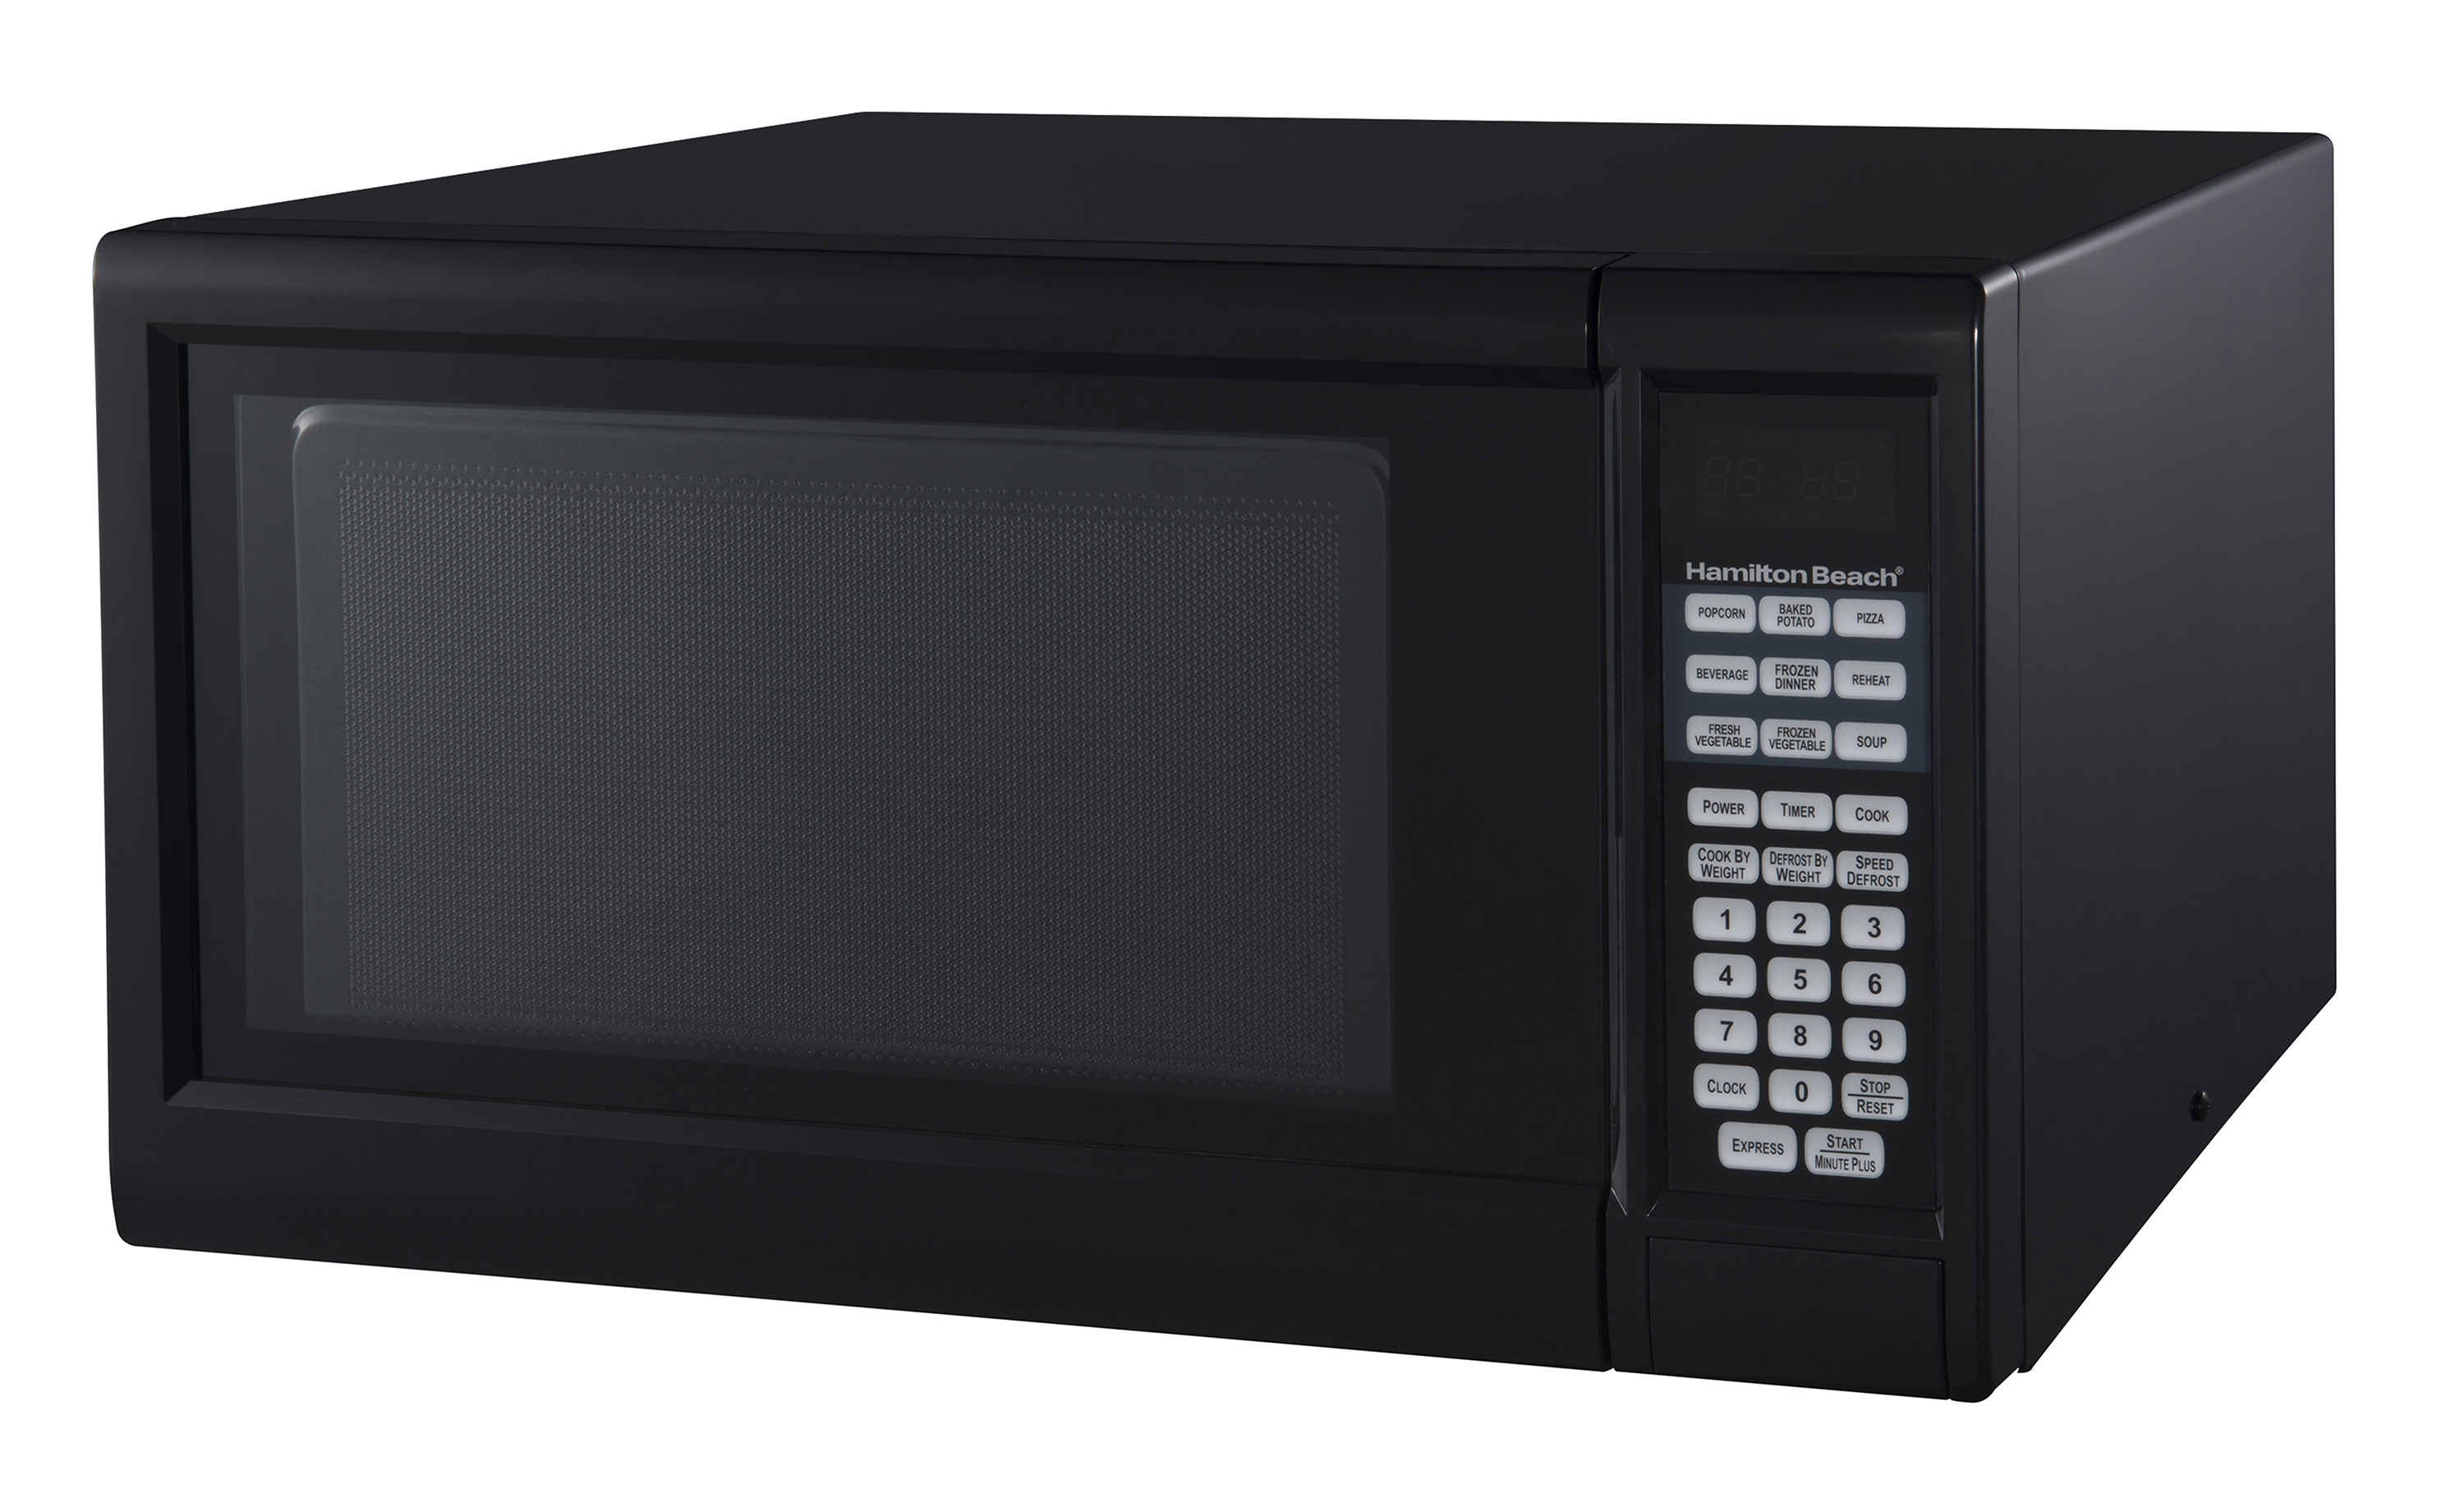 Hamilton Beach 1.3 Cu ft Digital Microwave Oven, Black - image 3 of 6